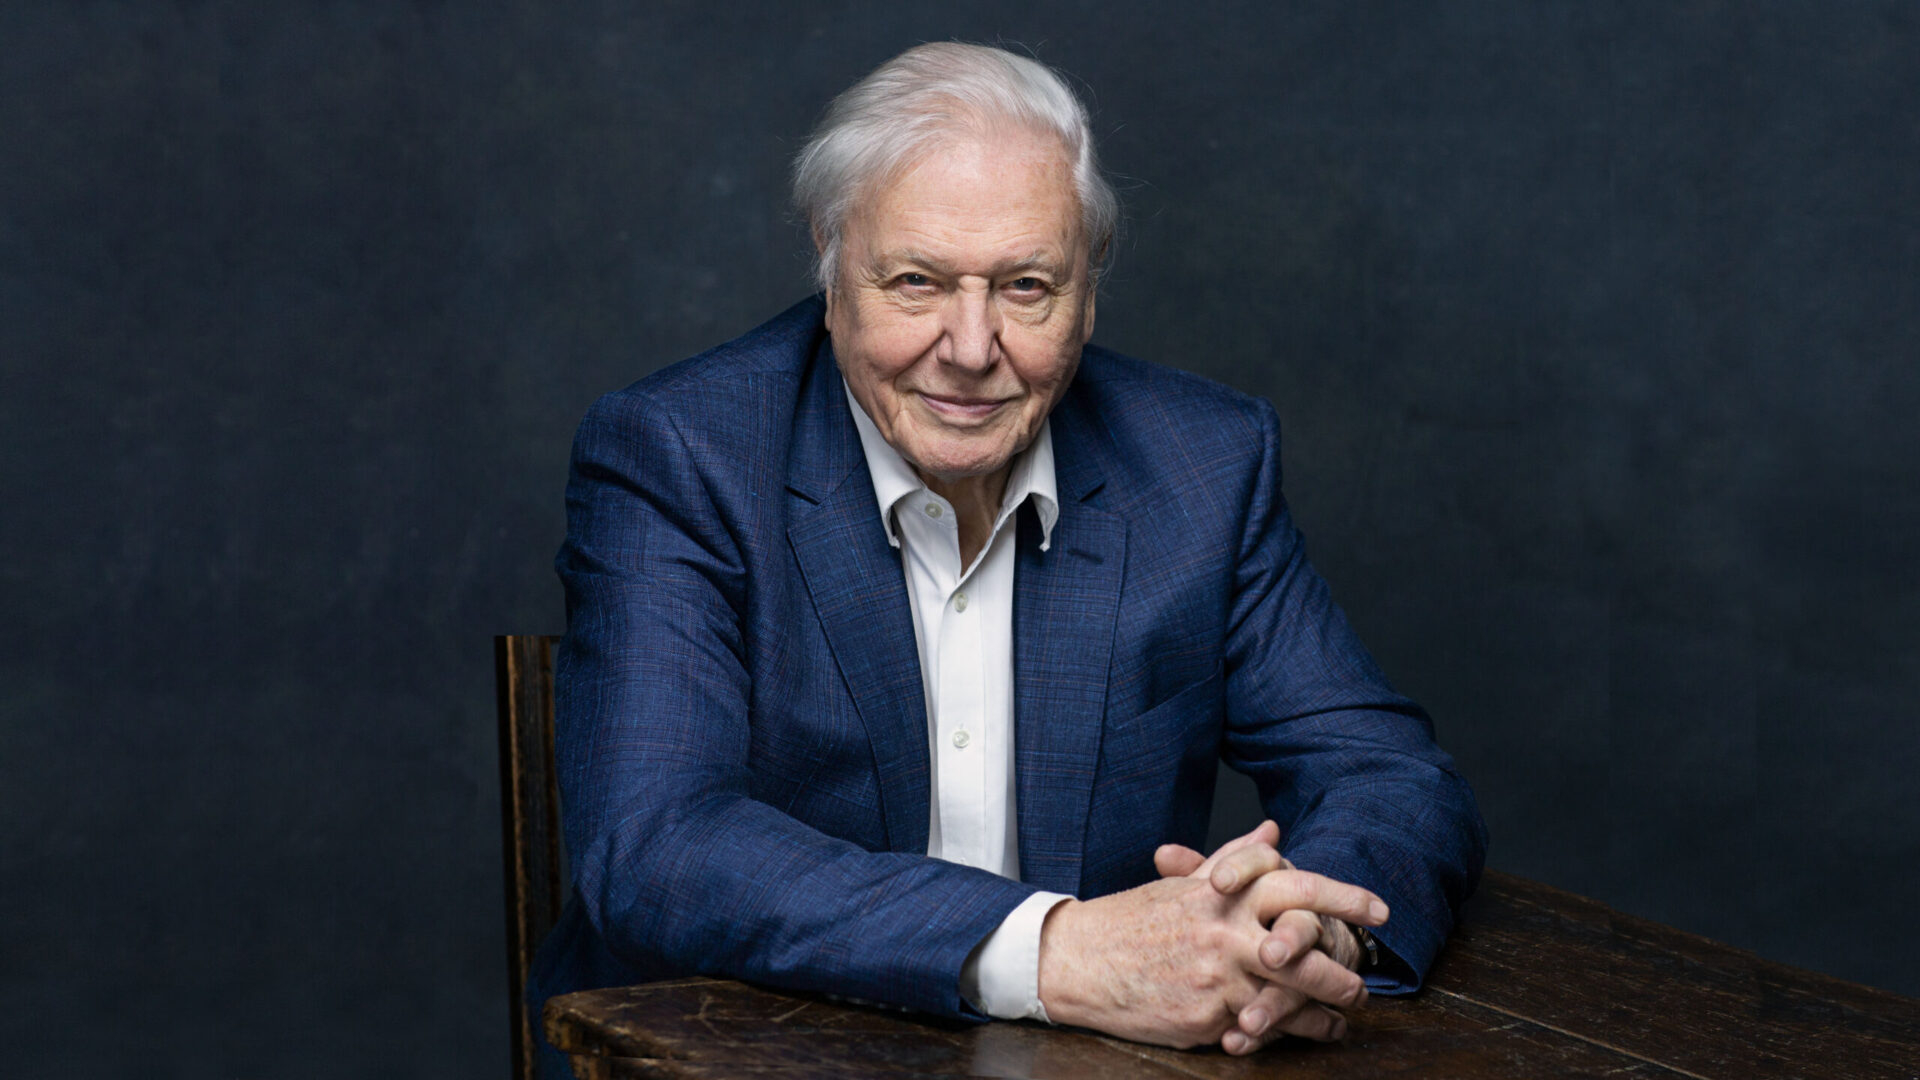 David Attenborough Biography: Age, Spouse, Net Worth, Books, Movies, Wikipedia, Children, Parents